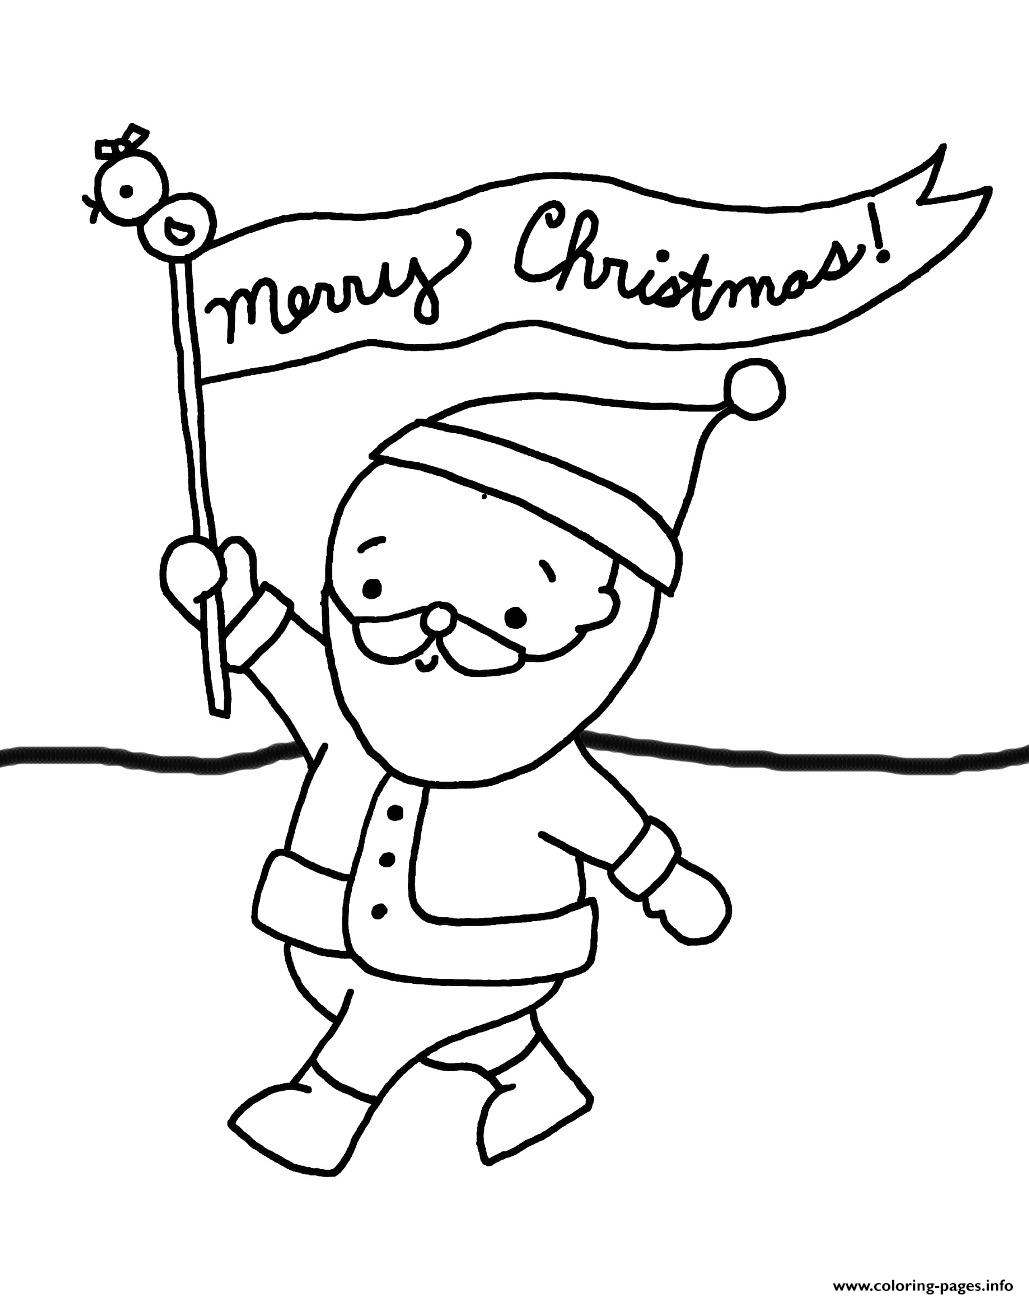 Santa Say Merry Christmas S For Kids2cc8 coloring